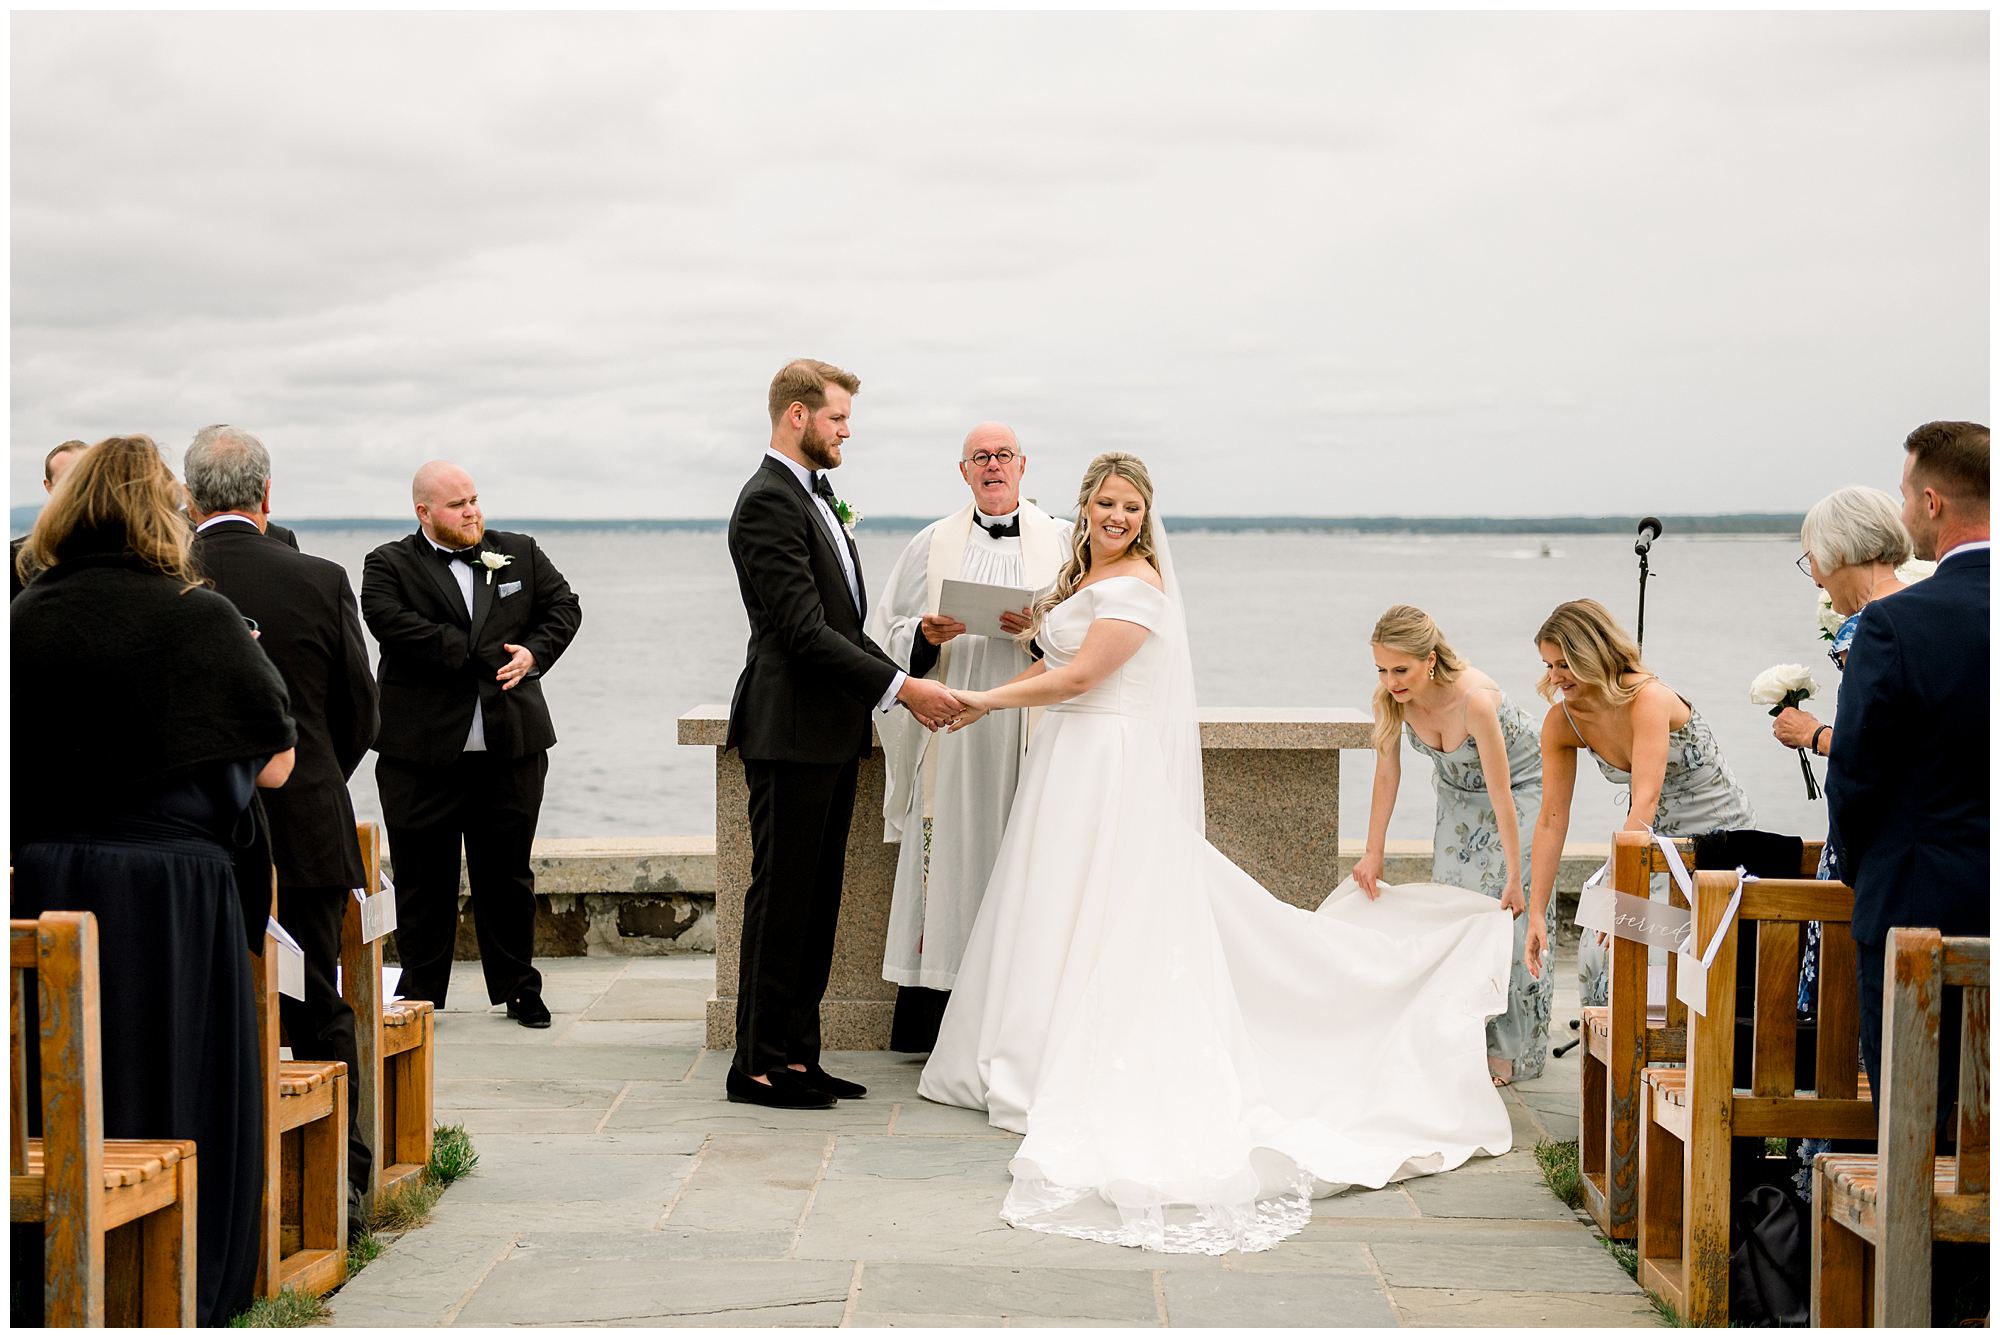 Wedding ceremony at Saint Ann's ivy the Sea Episcopal Church n Kennebunkport Maine